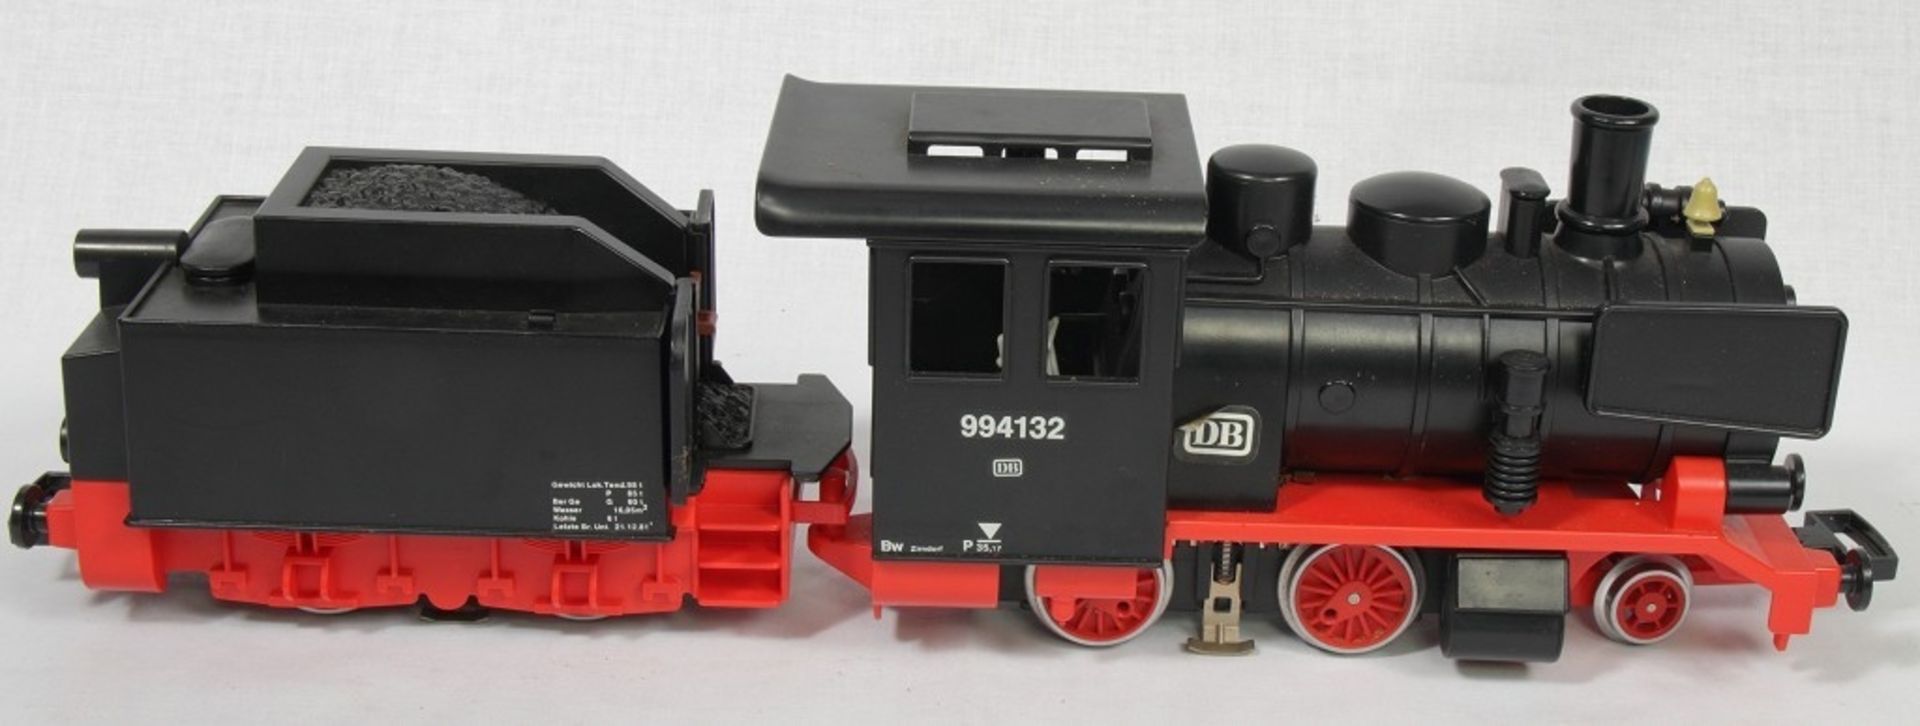 XXL Konvolut Playmobil Züge Eisenbahn ca. 10kg - Image 2 of 8